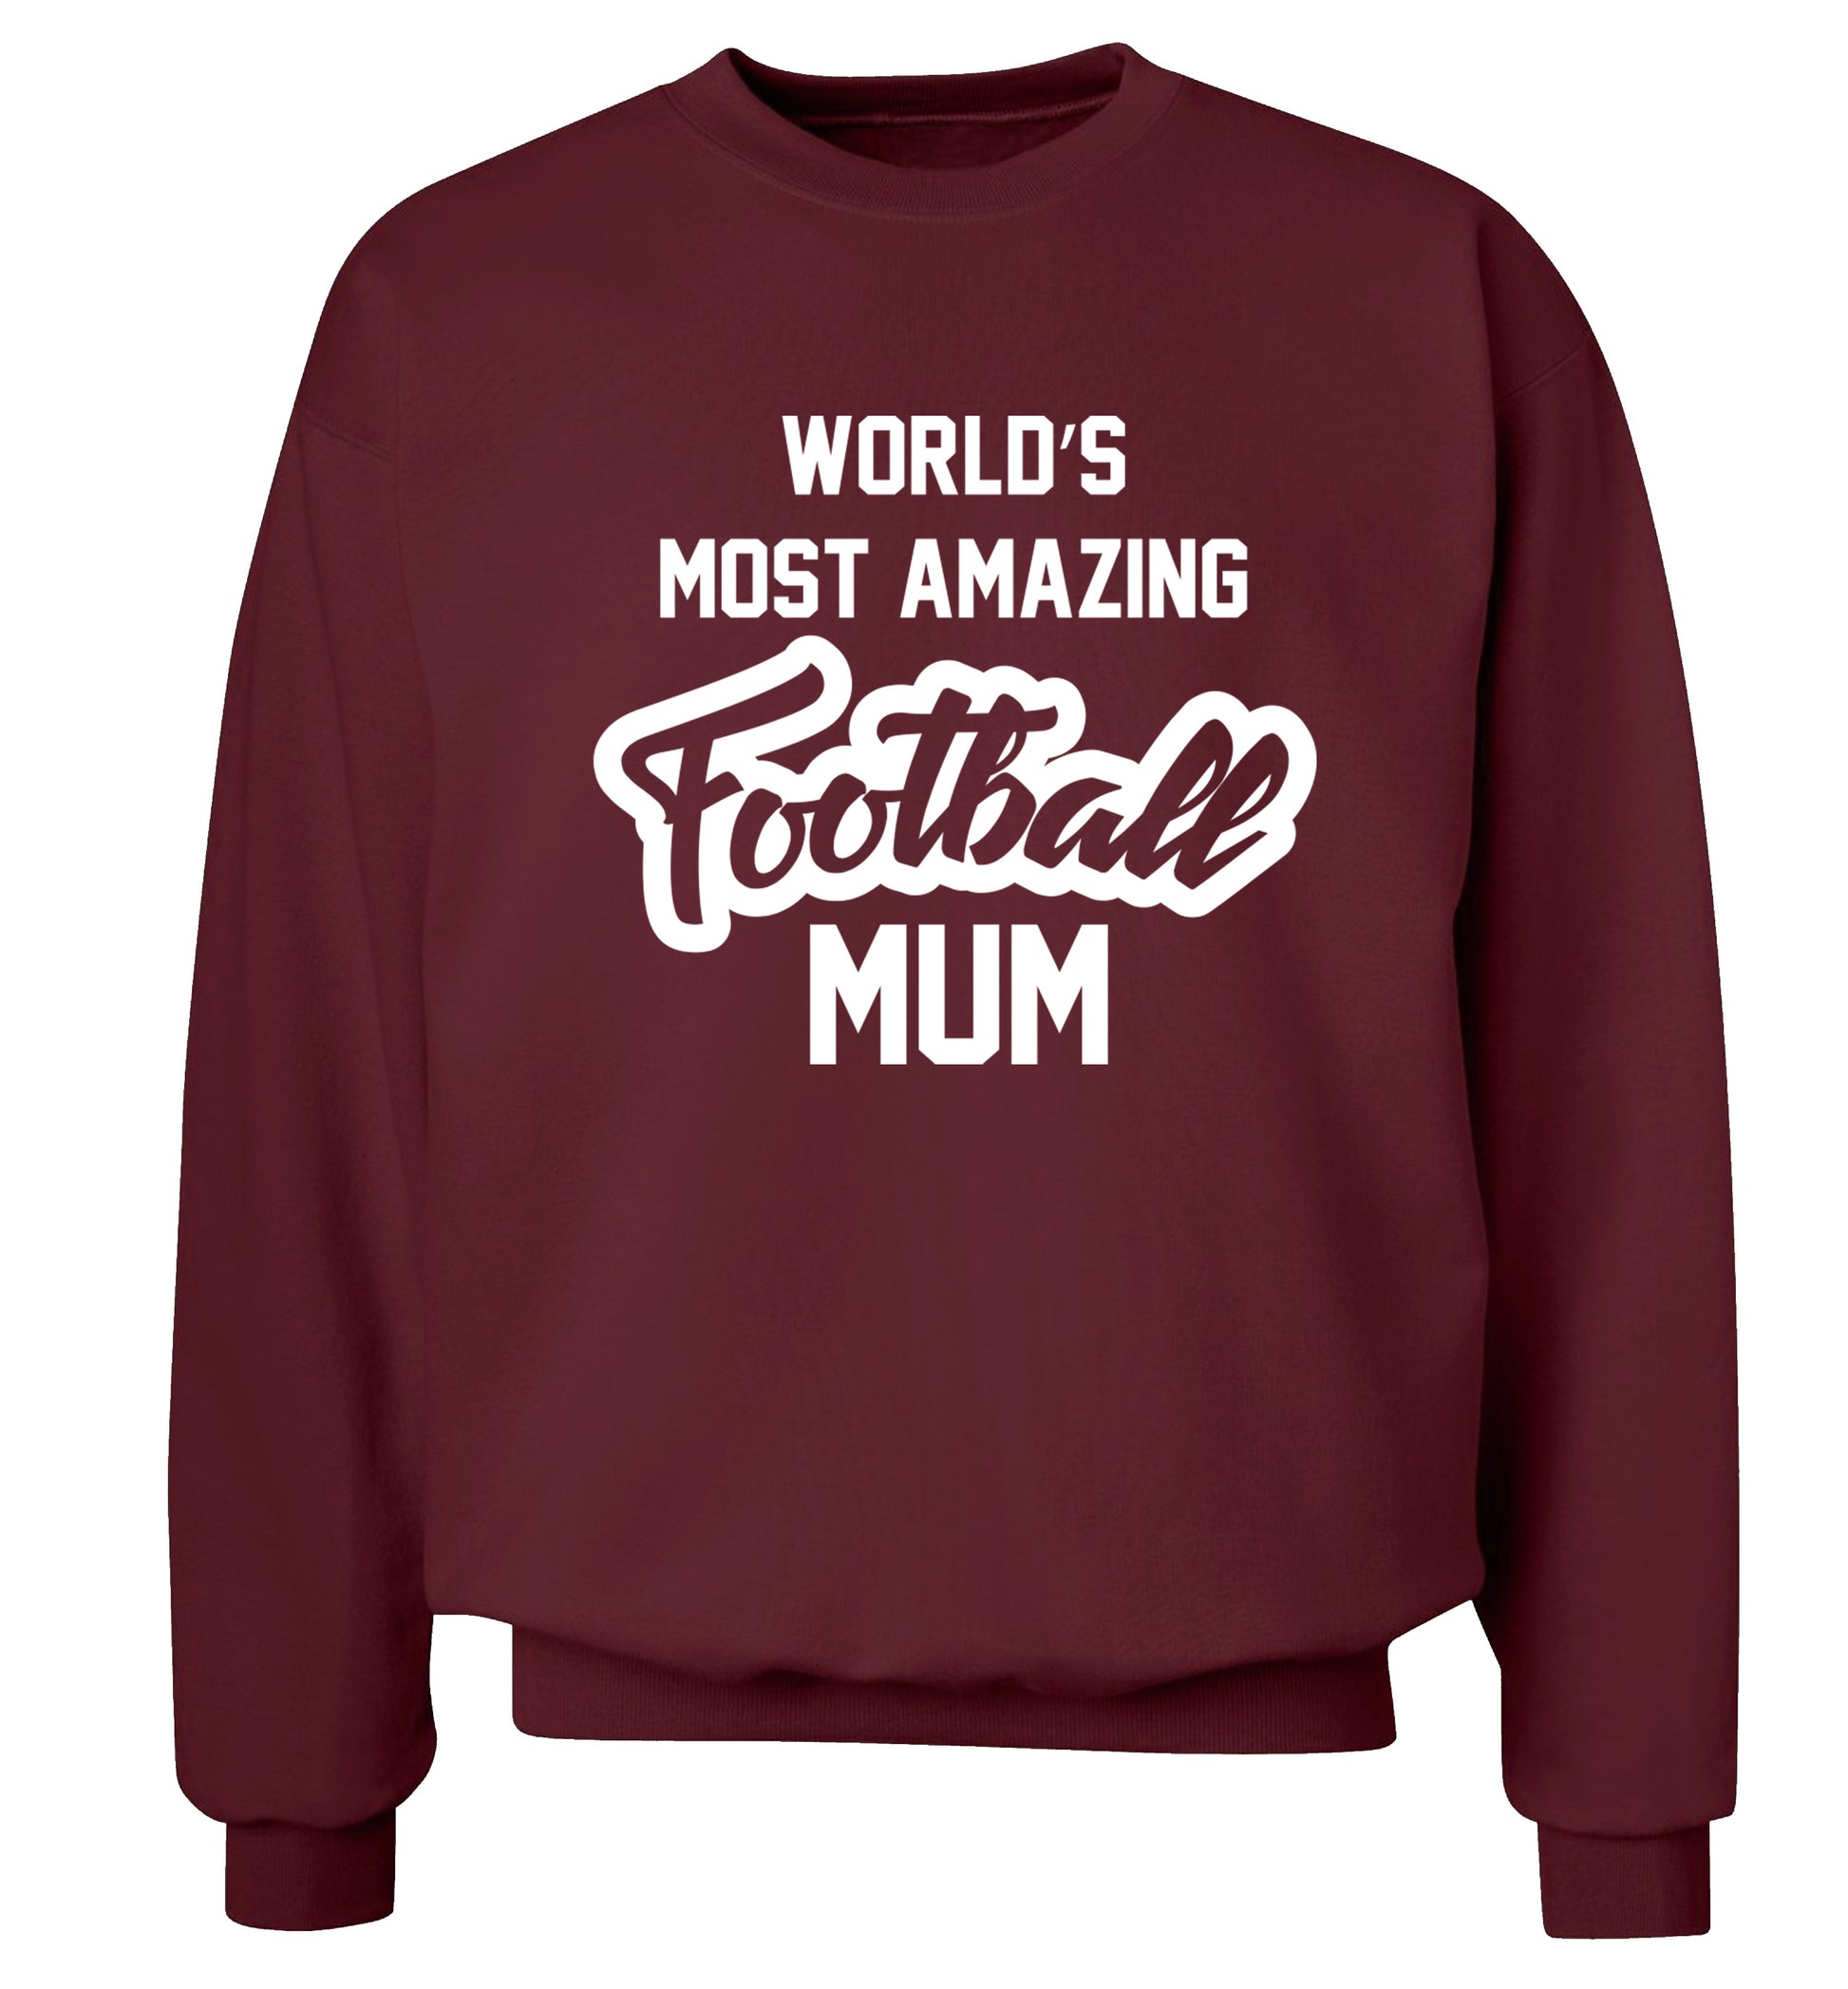 Worlds most amazing football mum Adult's unisexmaroon Sweater 2XL